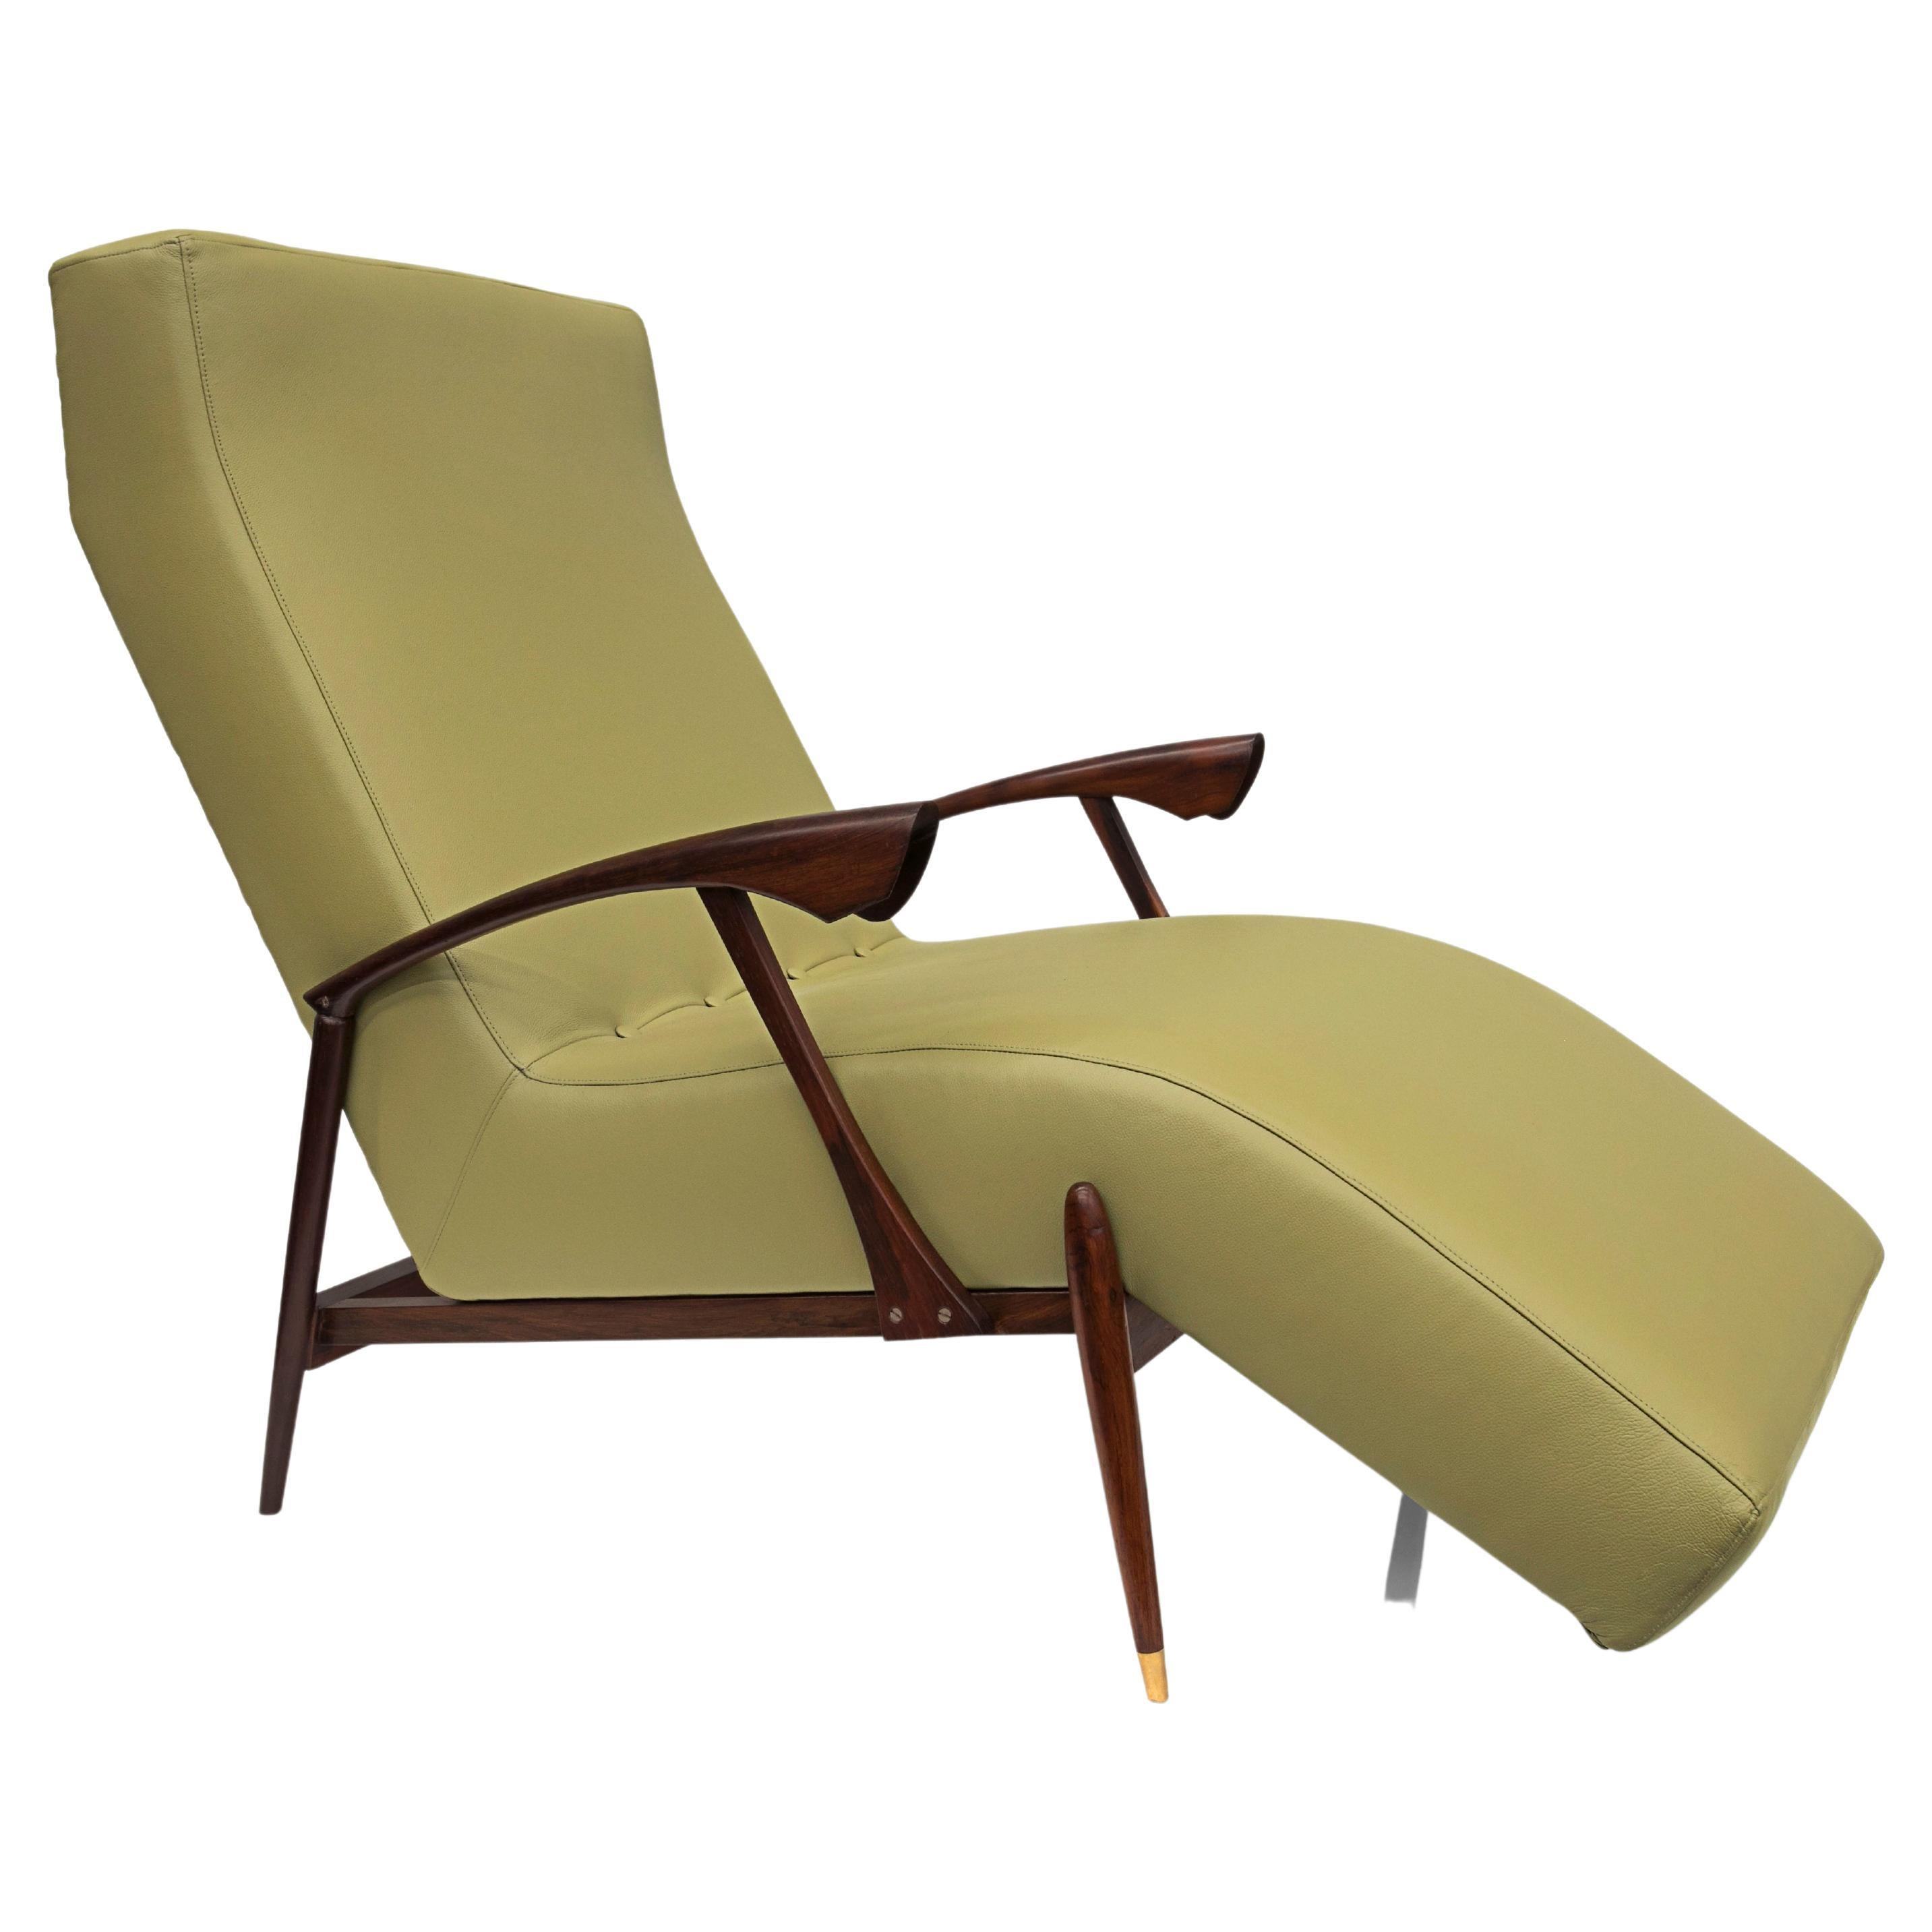 Brazilian Modern Chaise Lounge in Green Leather, Hardwood, Brass, 1960s, Brazil For Sale